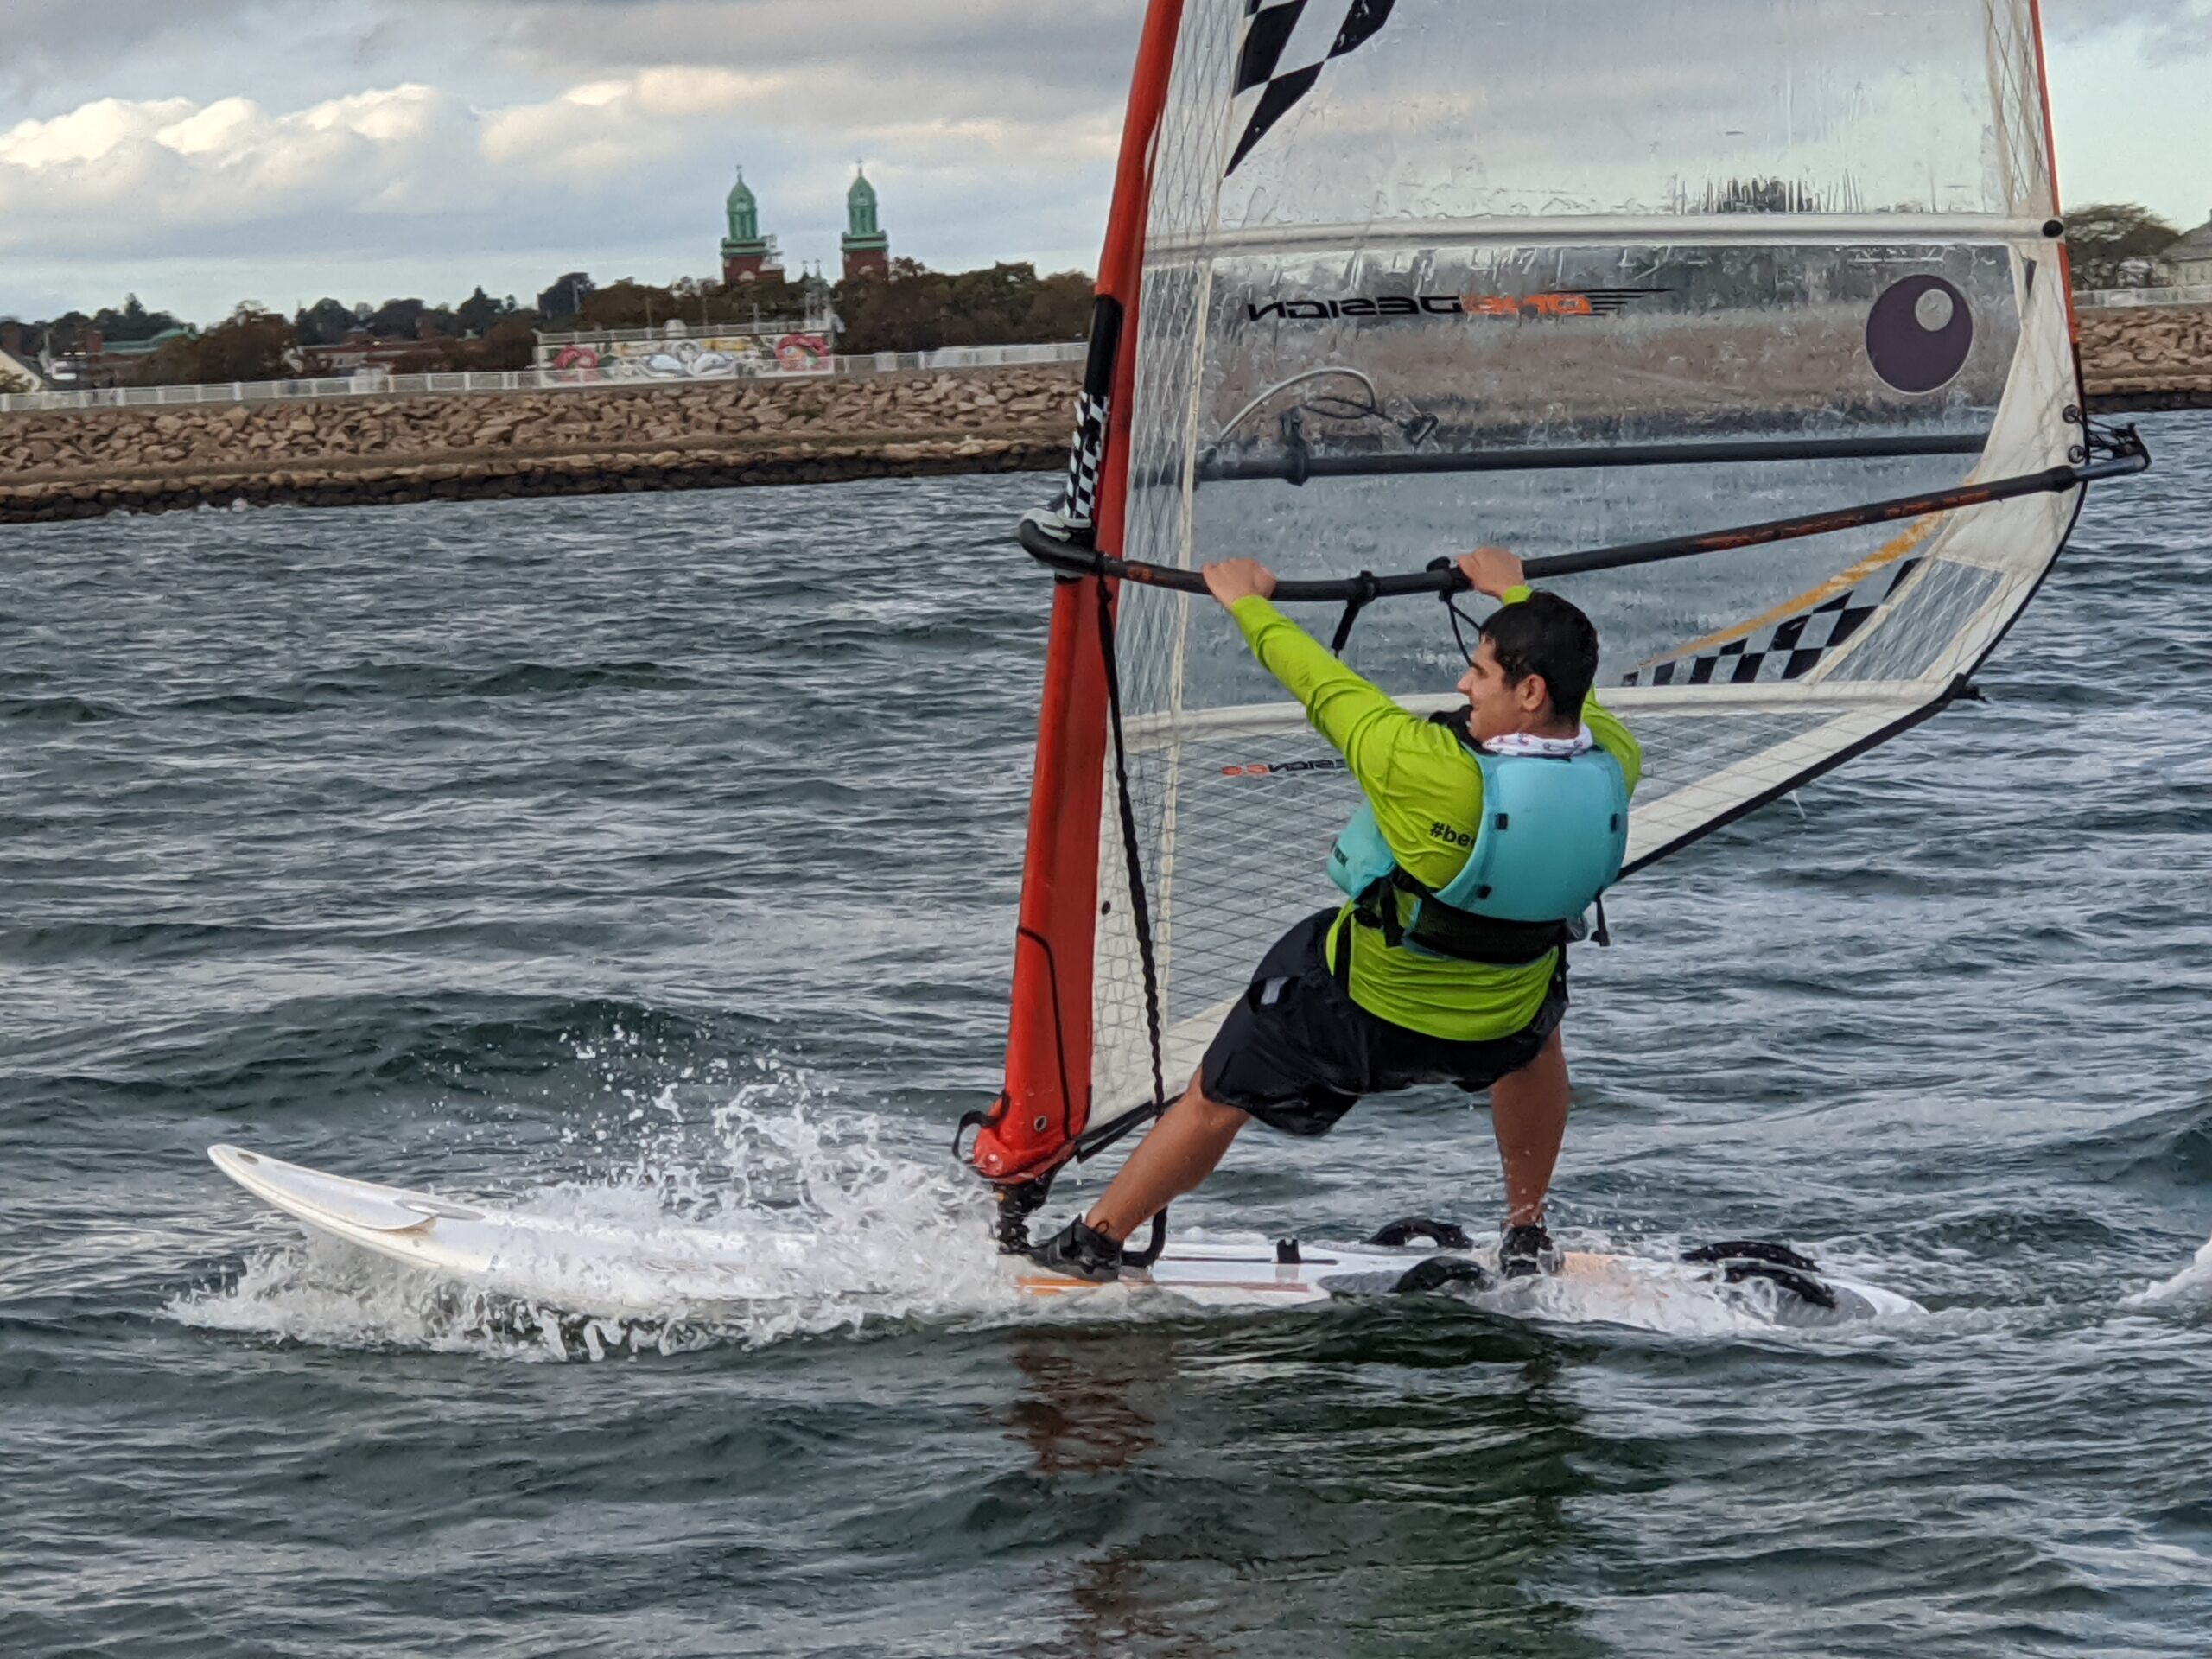 Iinstructor sailing windsurfer